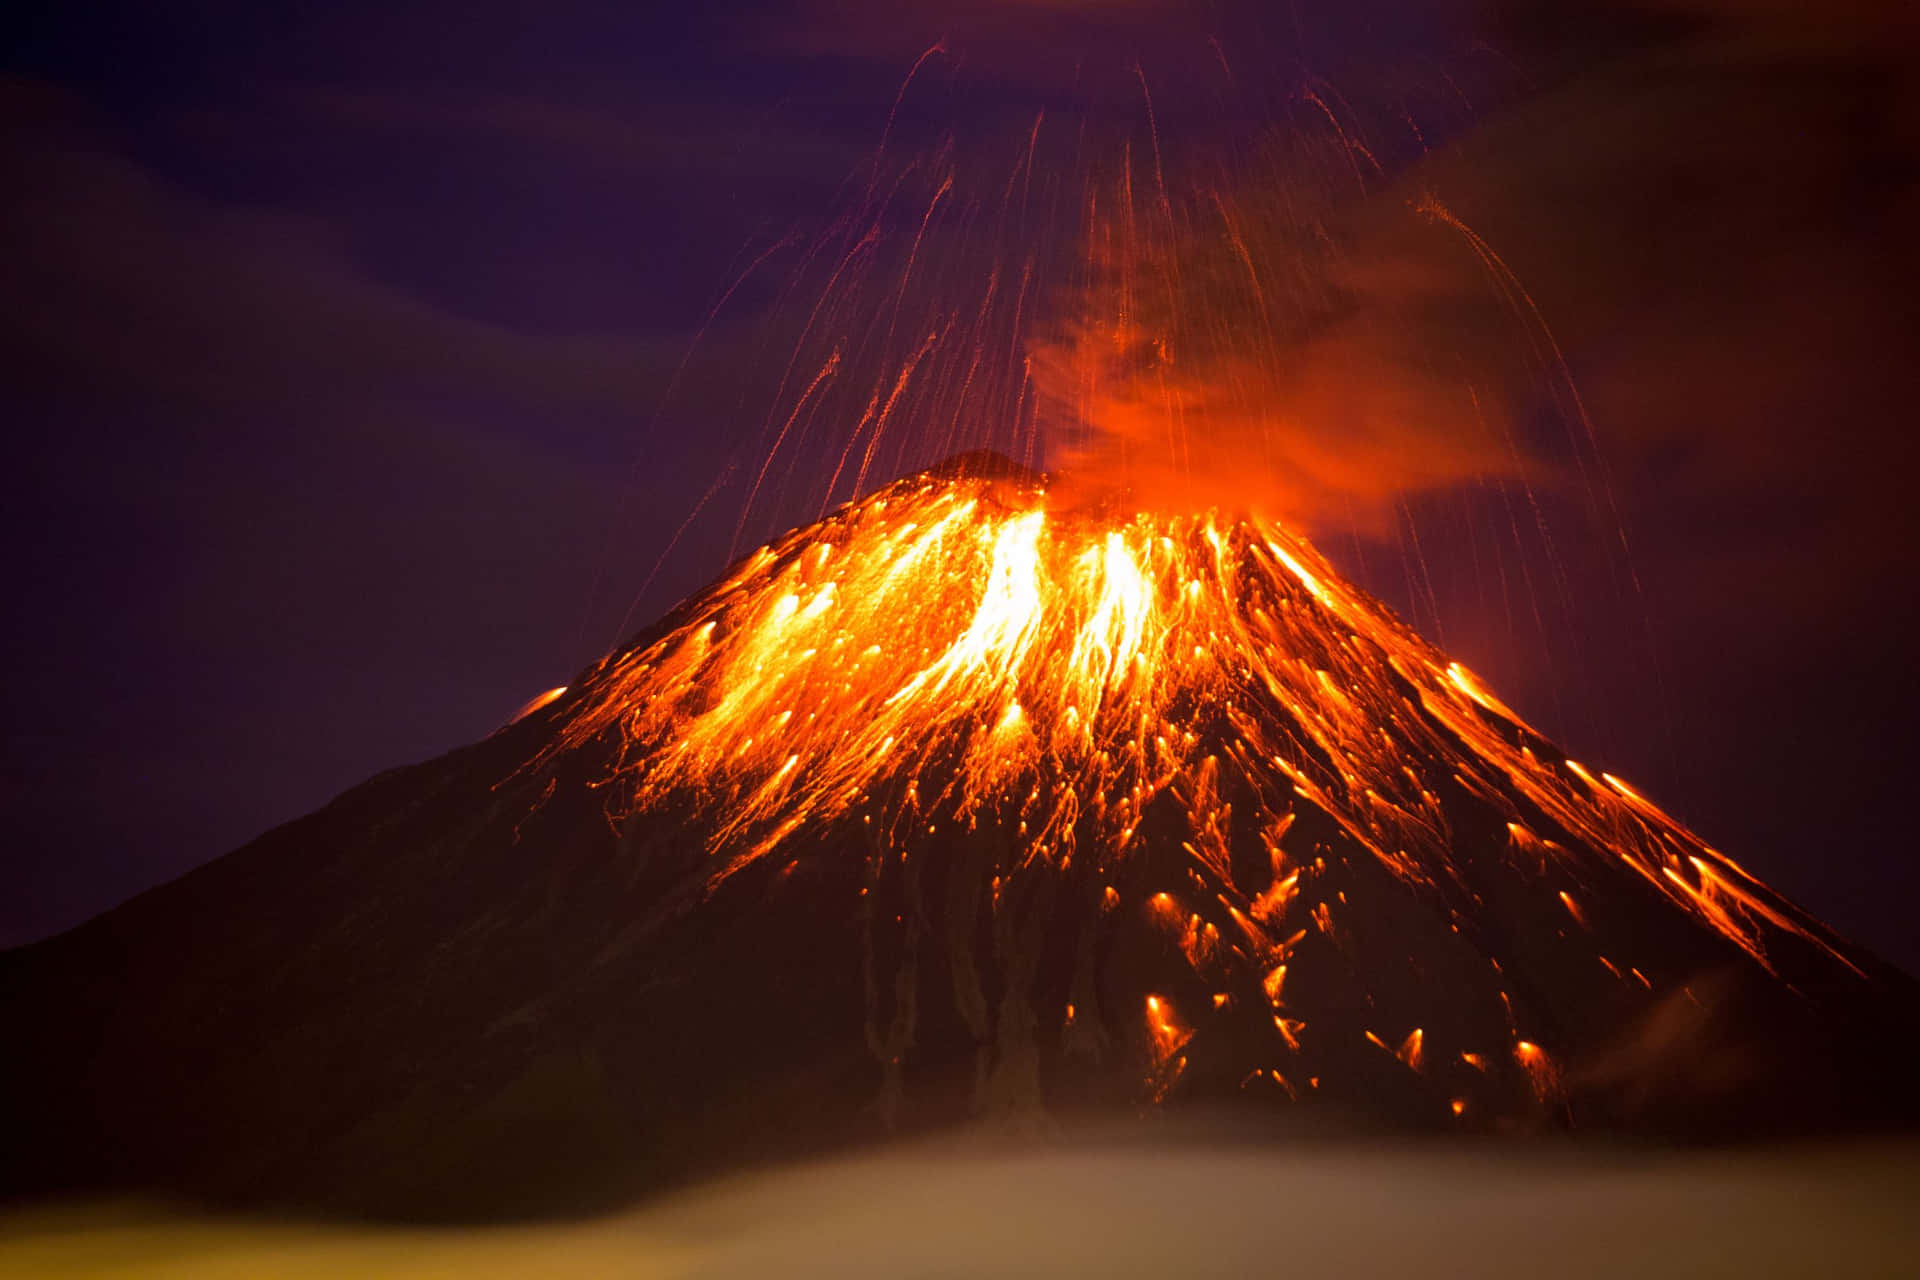 Lamajestuosa Belleza De Un Volcán En Erupción.